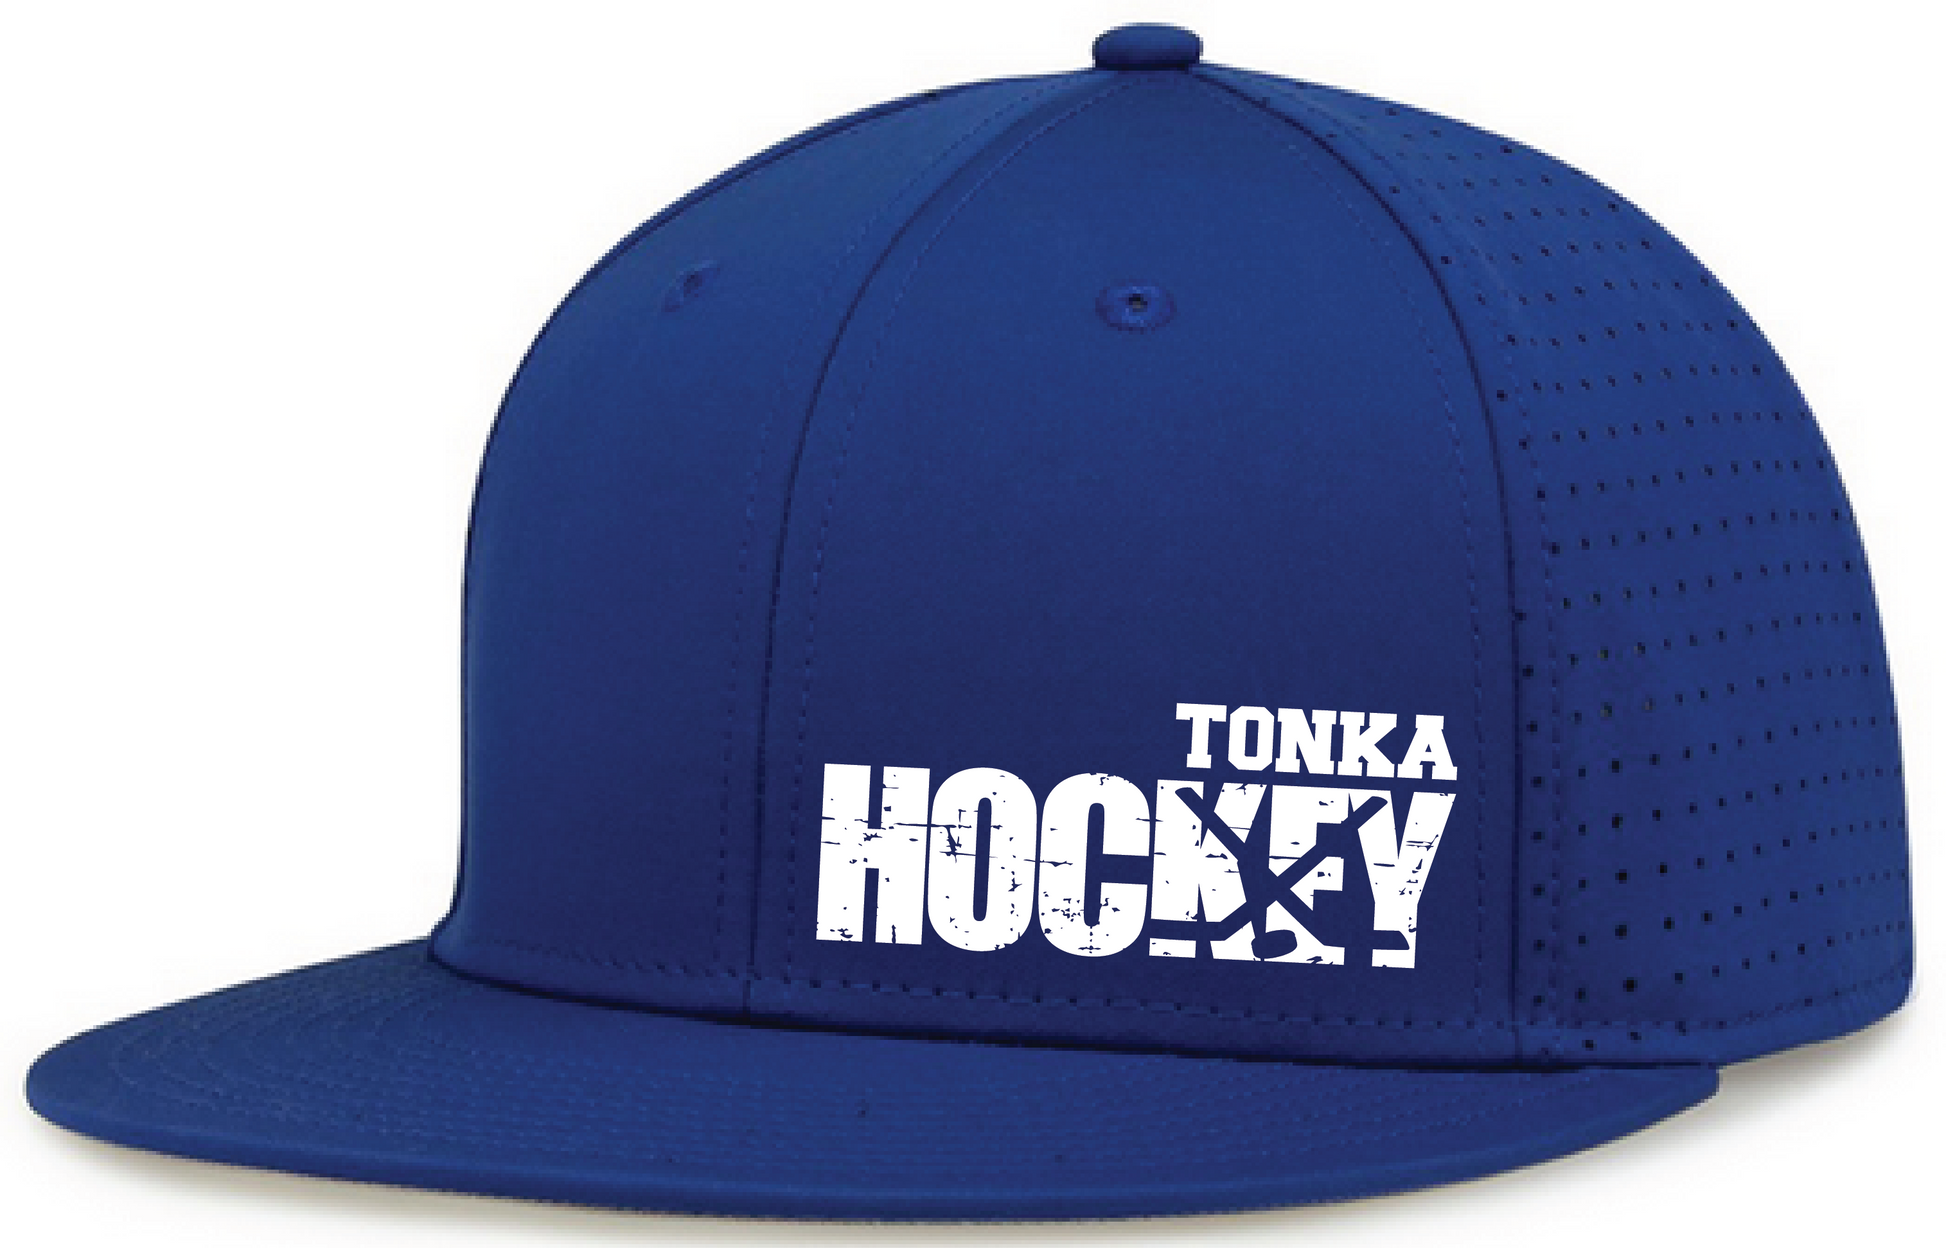 Tonka Hockey Distorted Royal